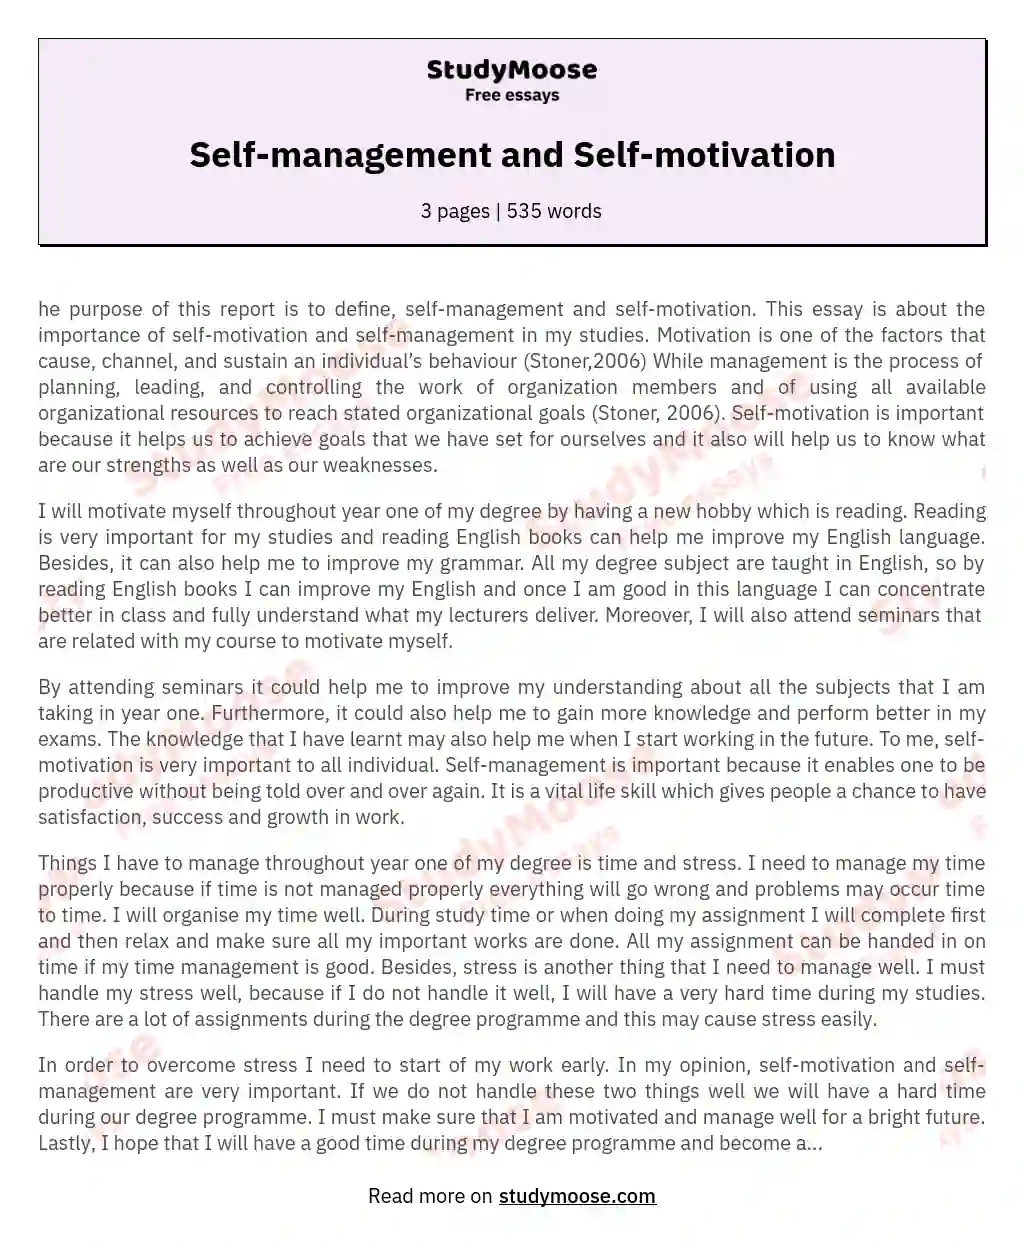 Self-management and Self-motivation essay